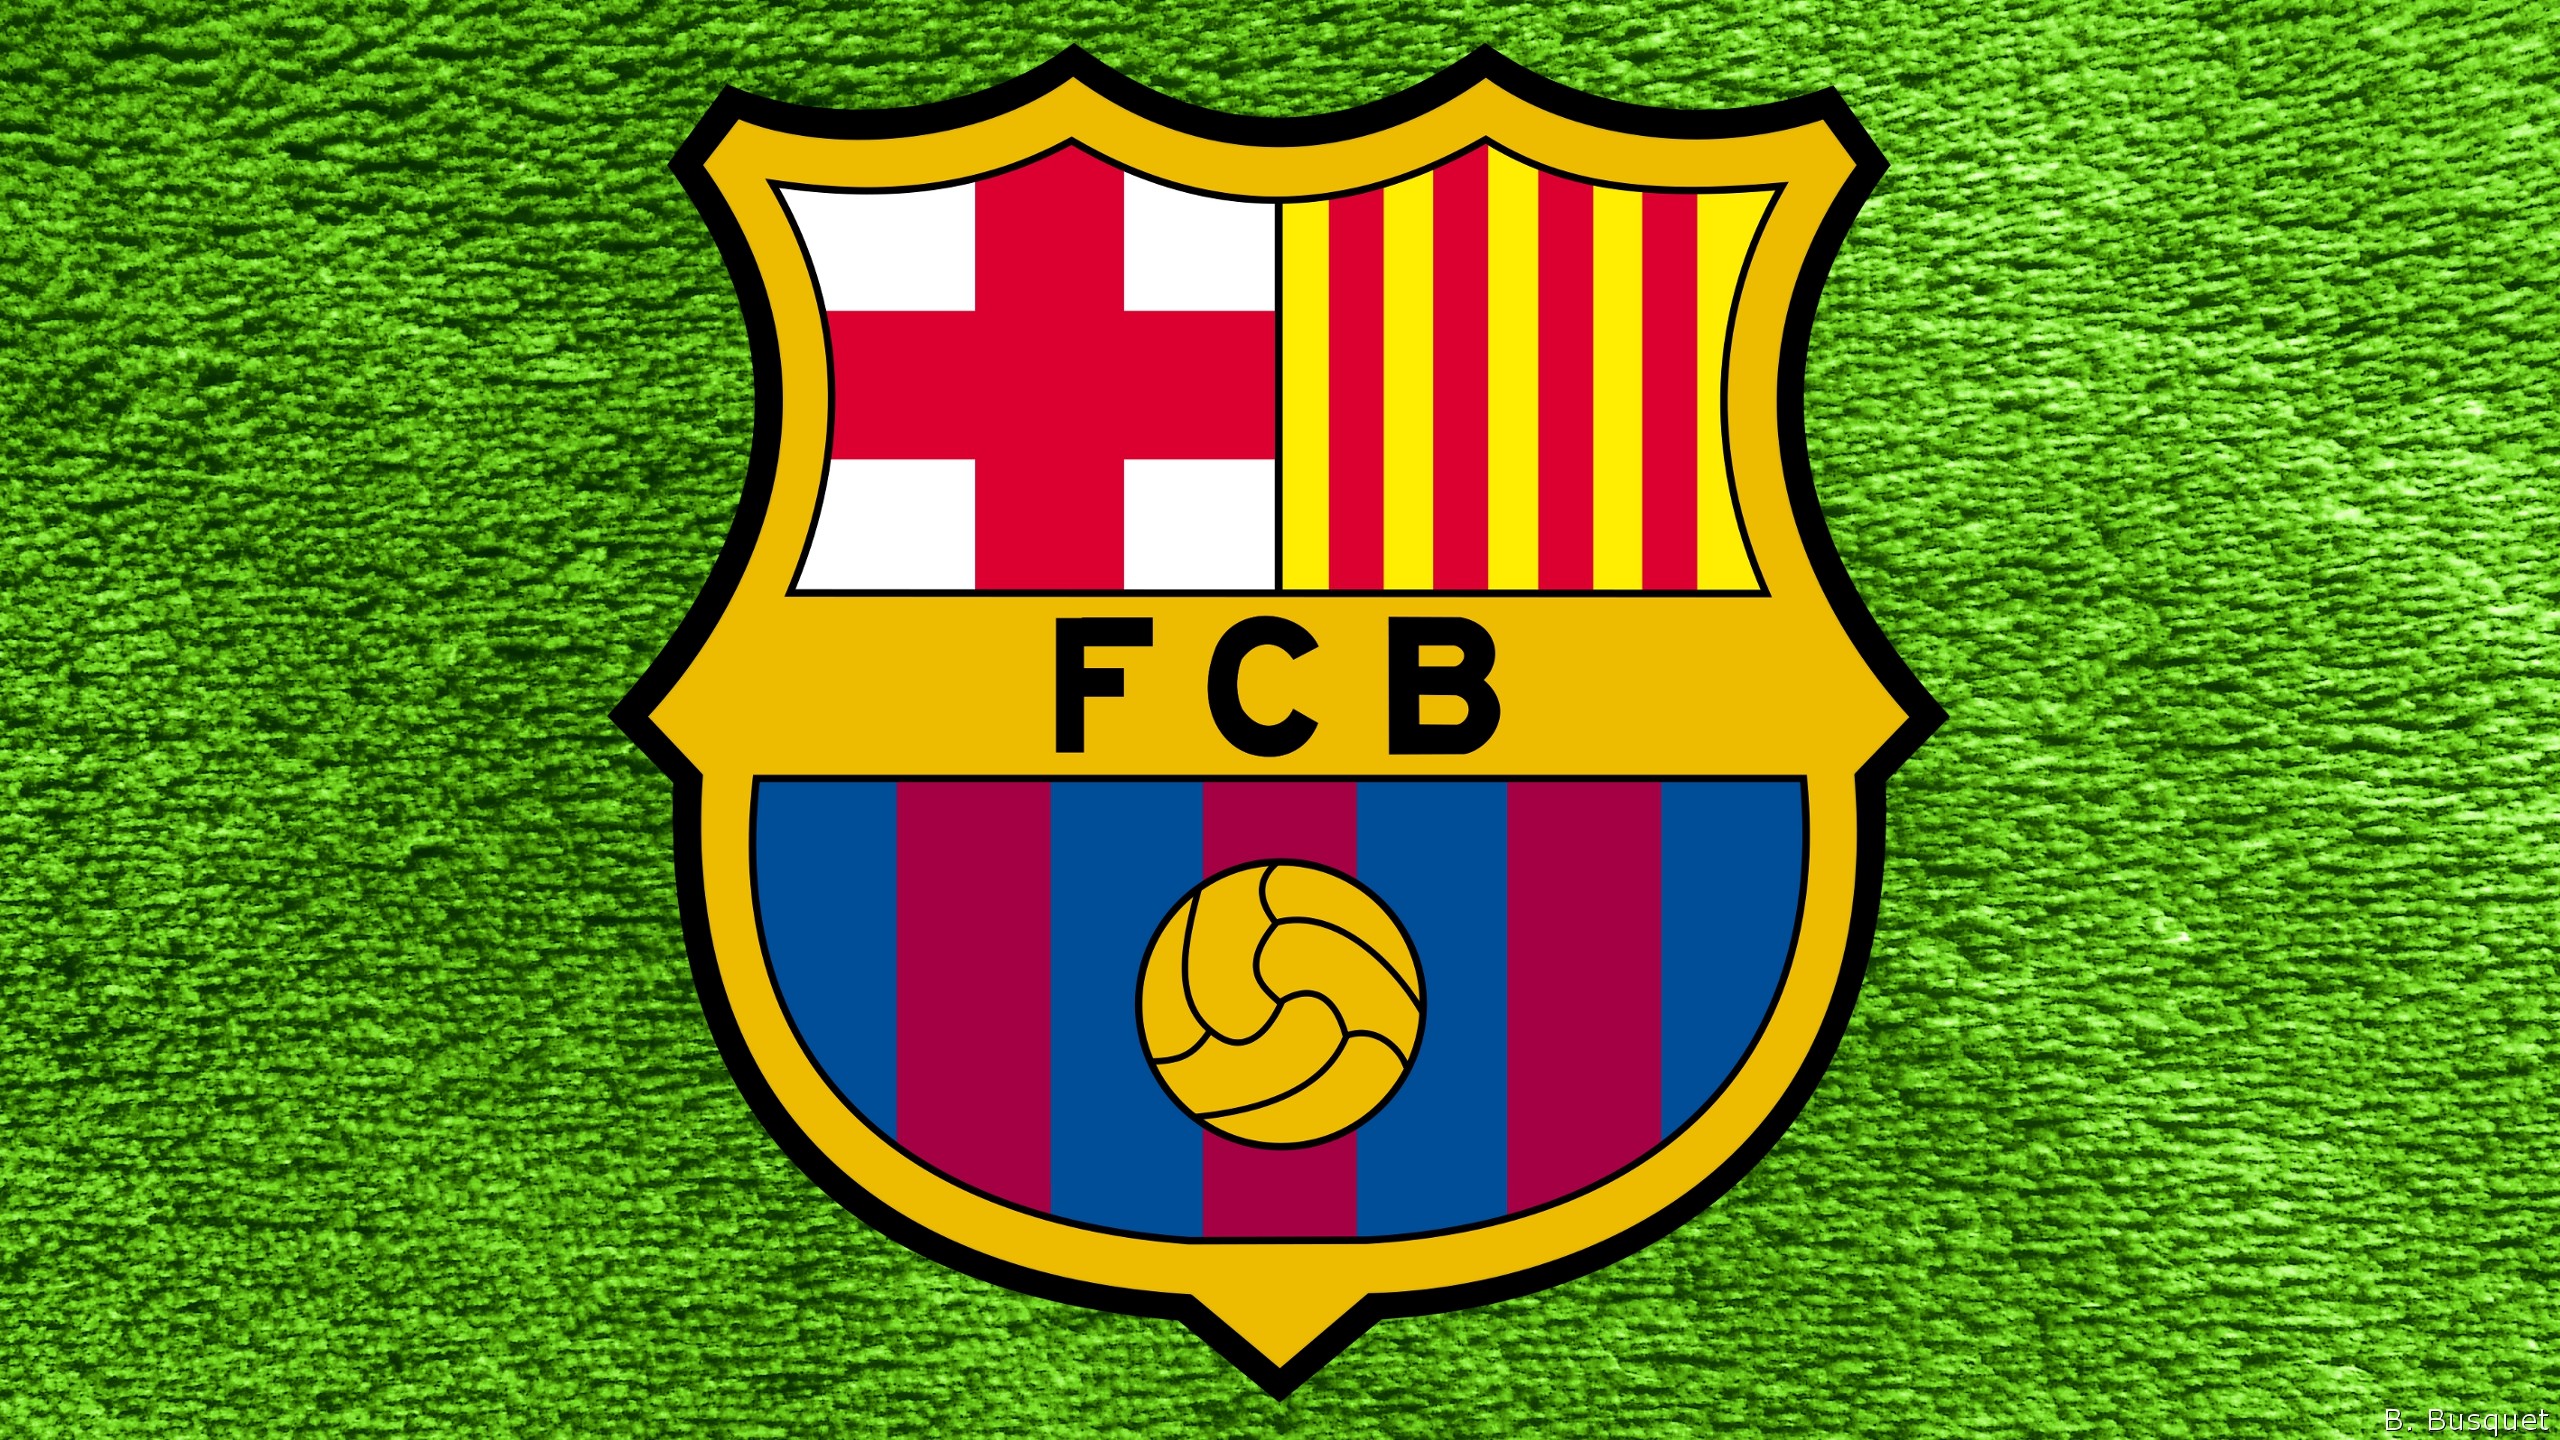 laden Gemaakt van Opa Sports FC Barcelona Wallpaper - Resolution:2560x1440 - ID:1311716 -  wallha.com